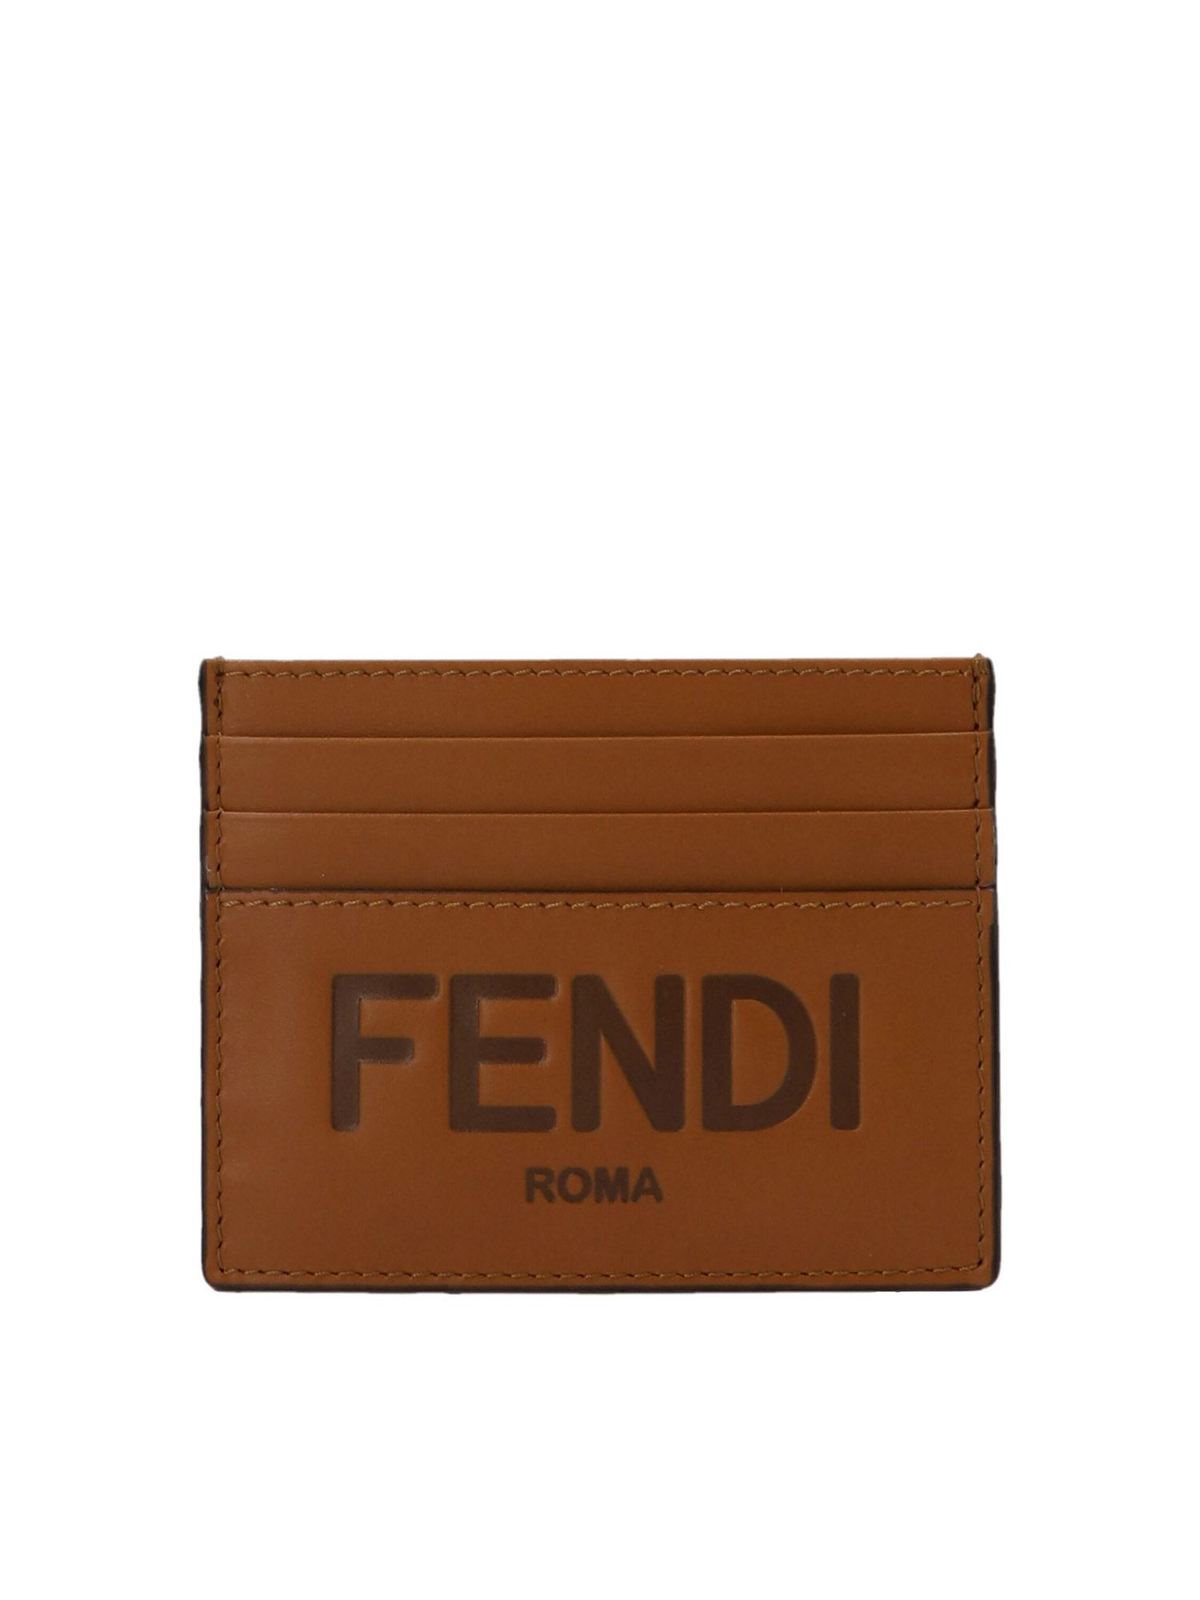 FENDI FENDI ROMA CARD HOLDER IN BROWN